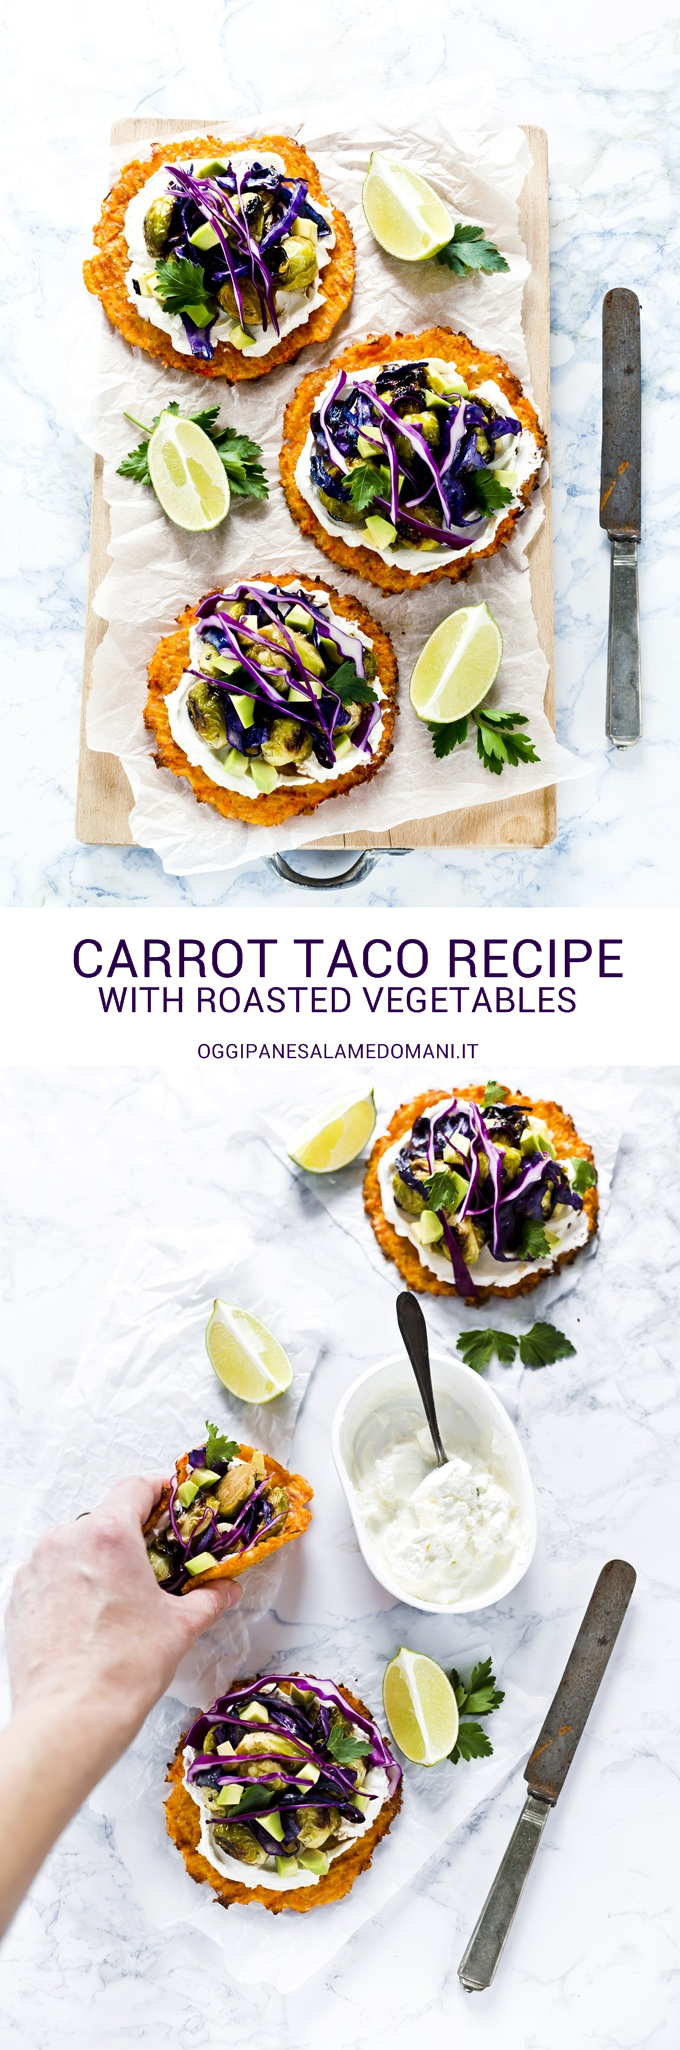 Tacos carote, cavoletti avocado - carrot taco shells with roasted brussels sprouts, avocado and purple cabbage - vegetarian taco recipe - fresco spalmabile Nonno Nanni